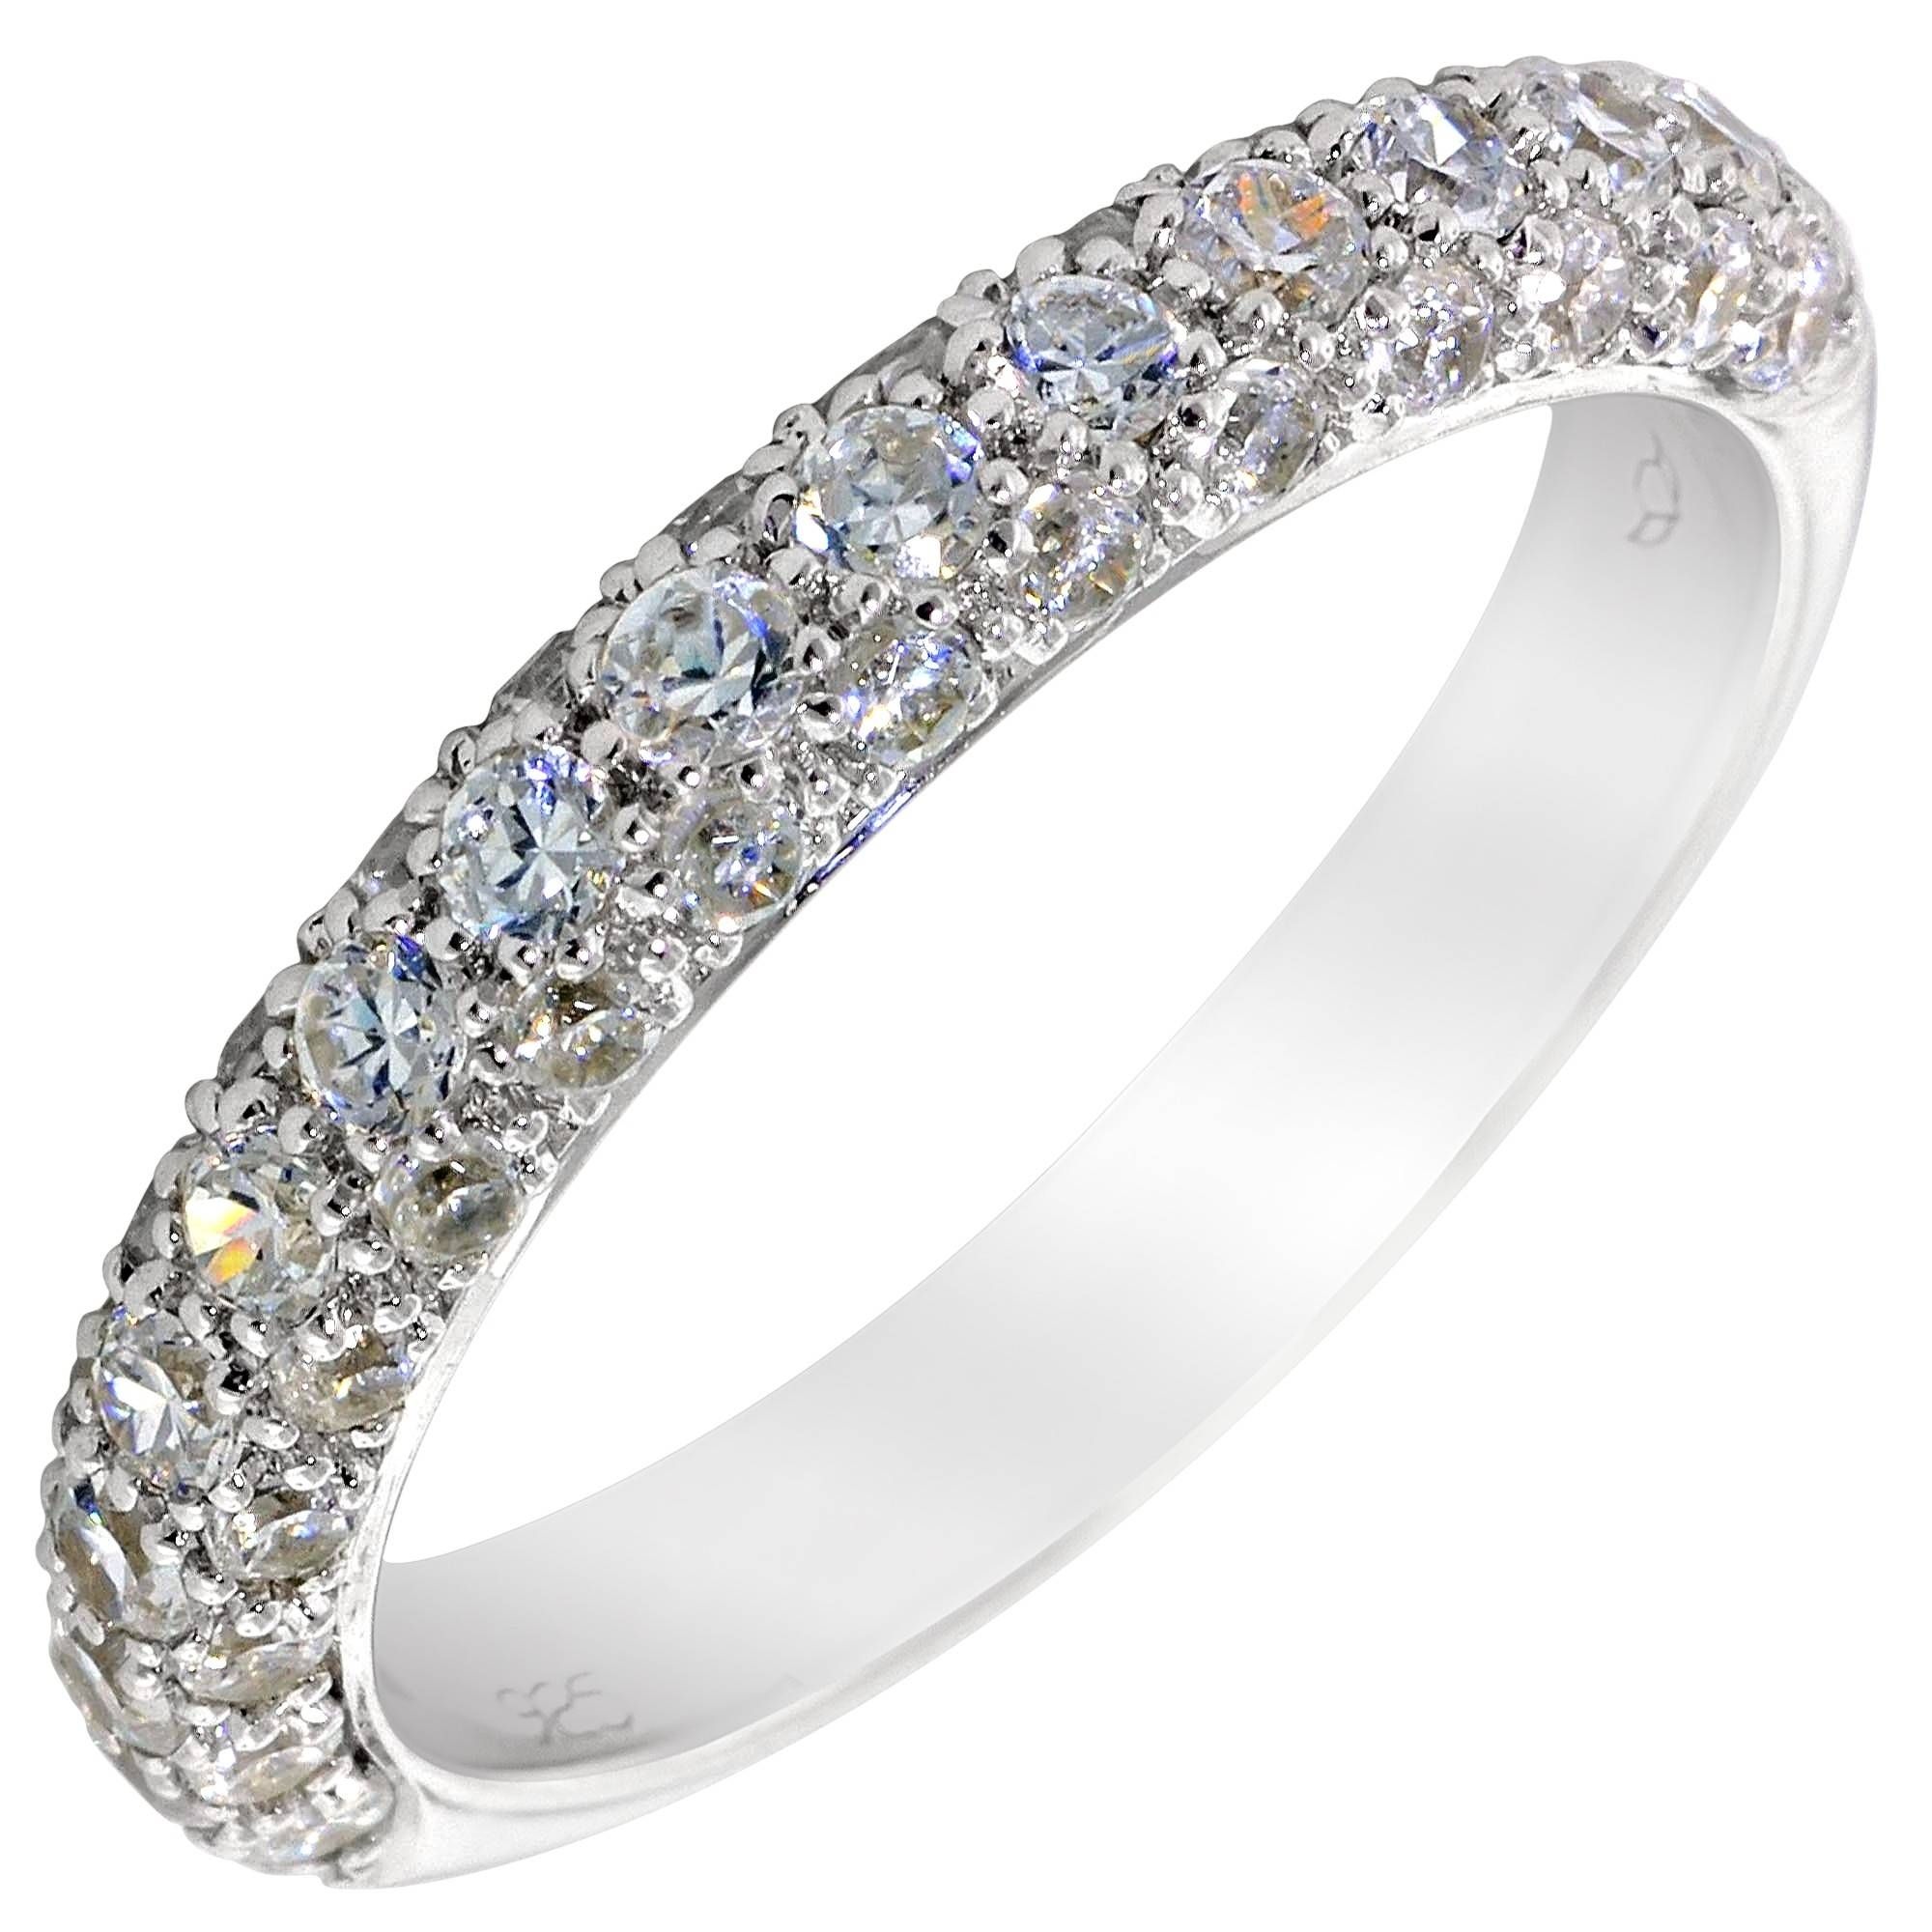 Elegant Diamond Wedding Bands For Women | Wedding Ideas Intended For Diamond Cluster Wedding Rings (View 13 of 15)